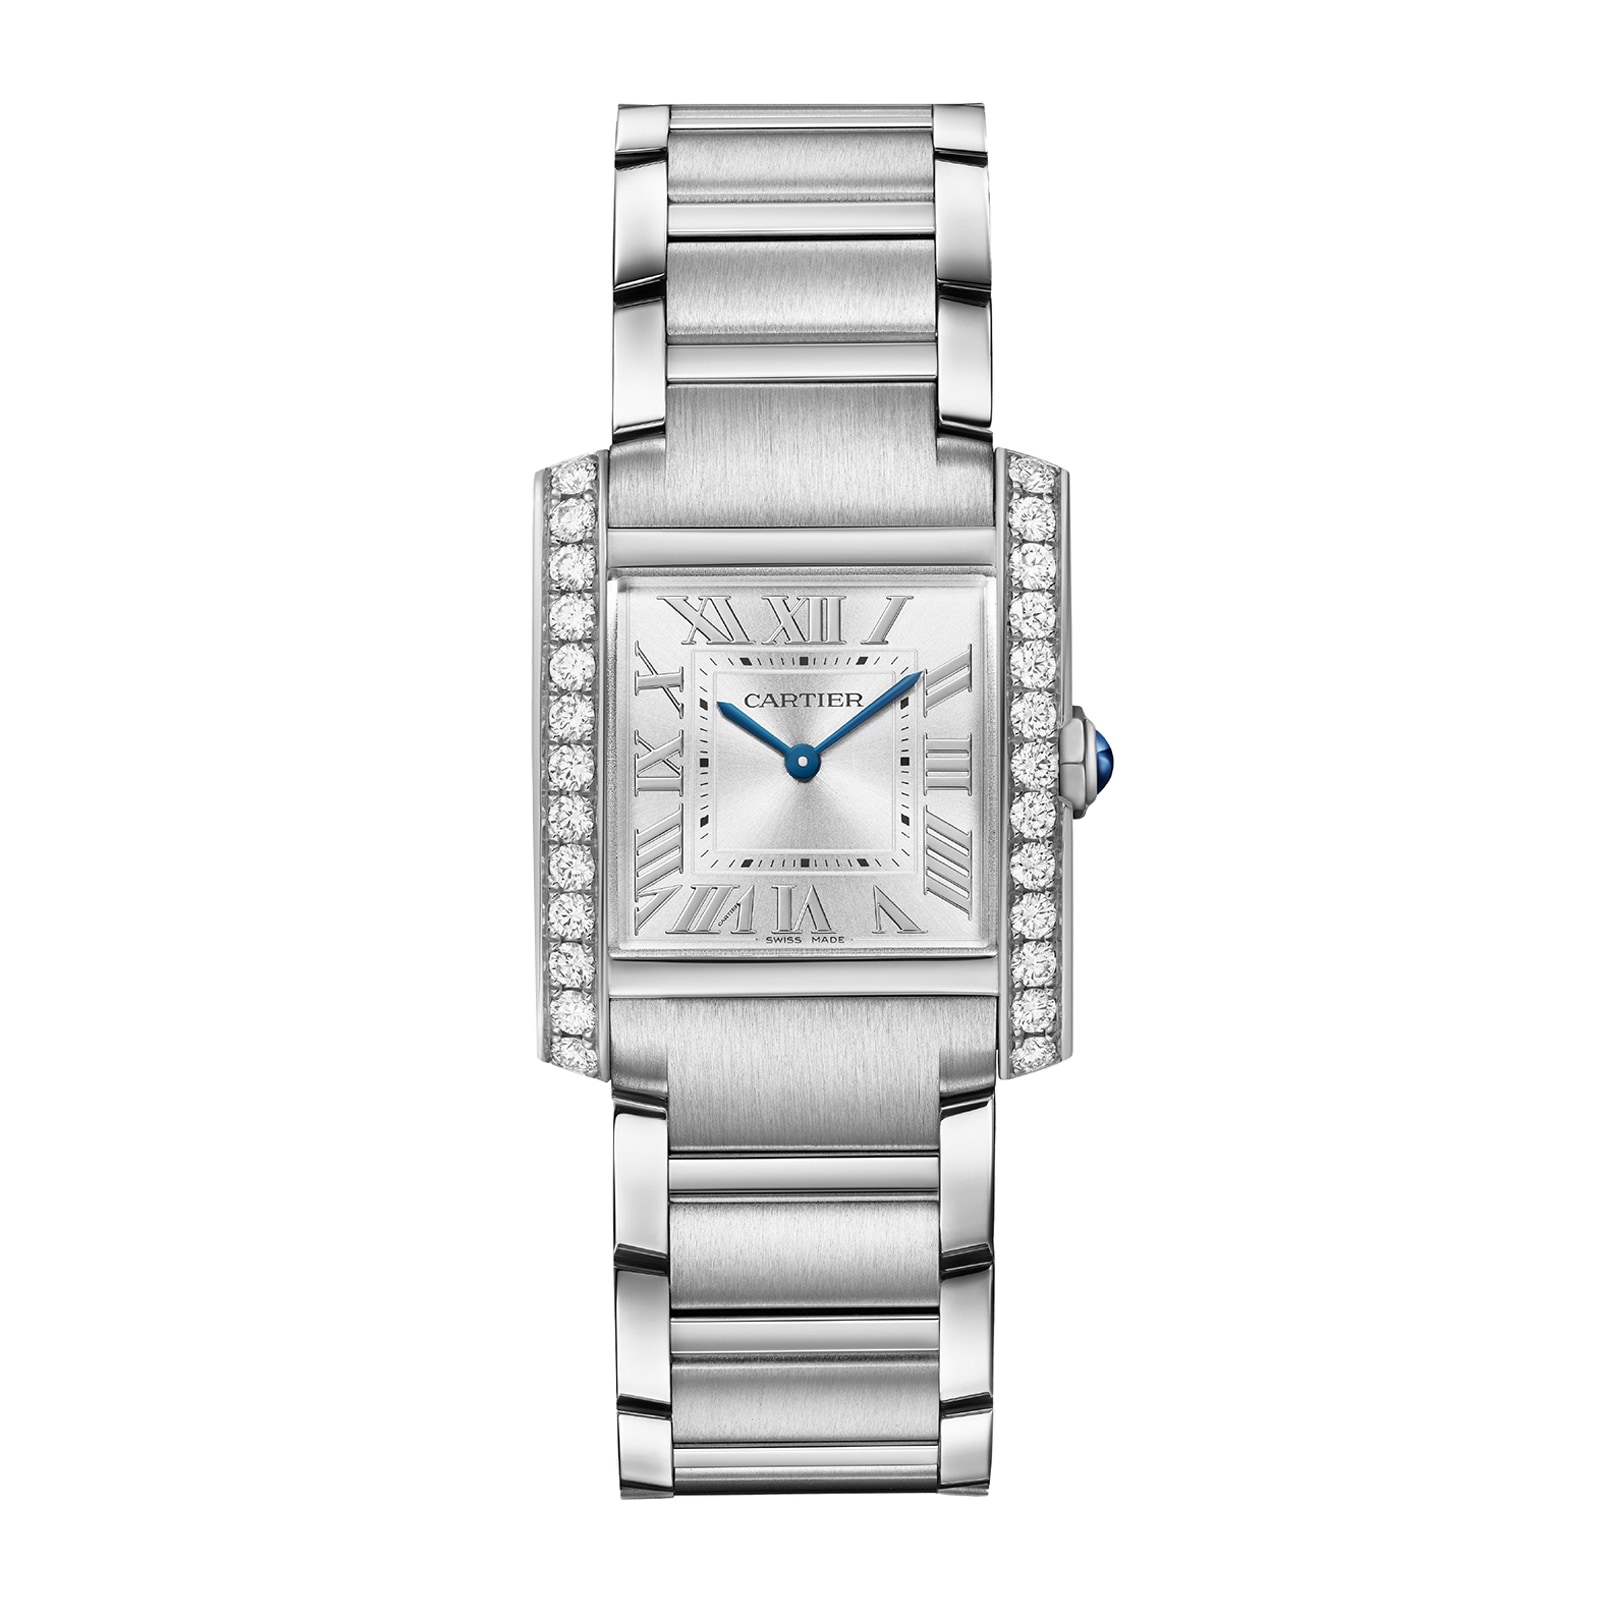 Cartier Tank Francaise Watch, Medium Model, Quartz Movement.